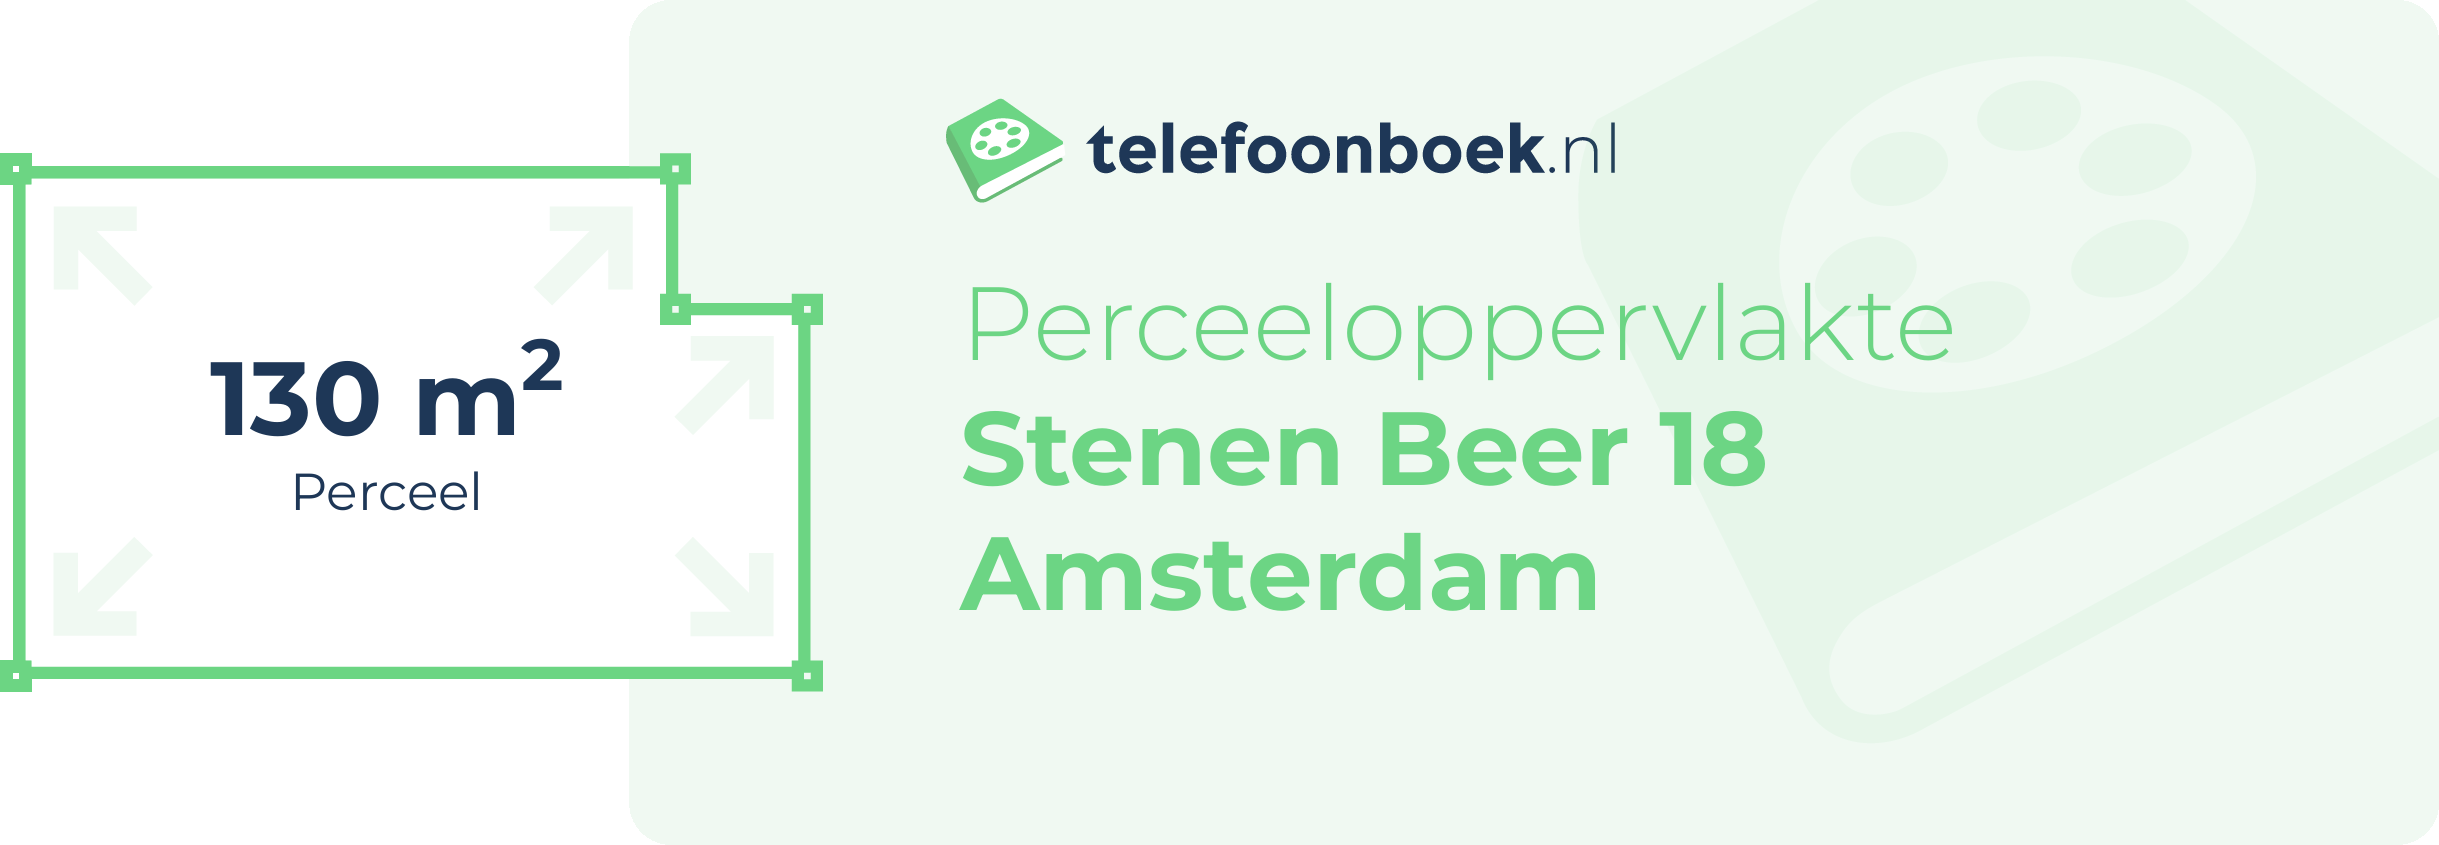 Perceeloppervlakte Stenen Beer 18 Amsterdam